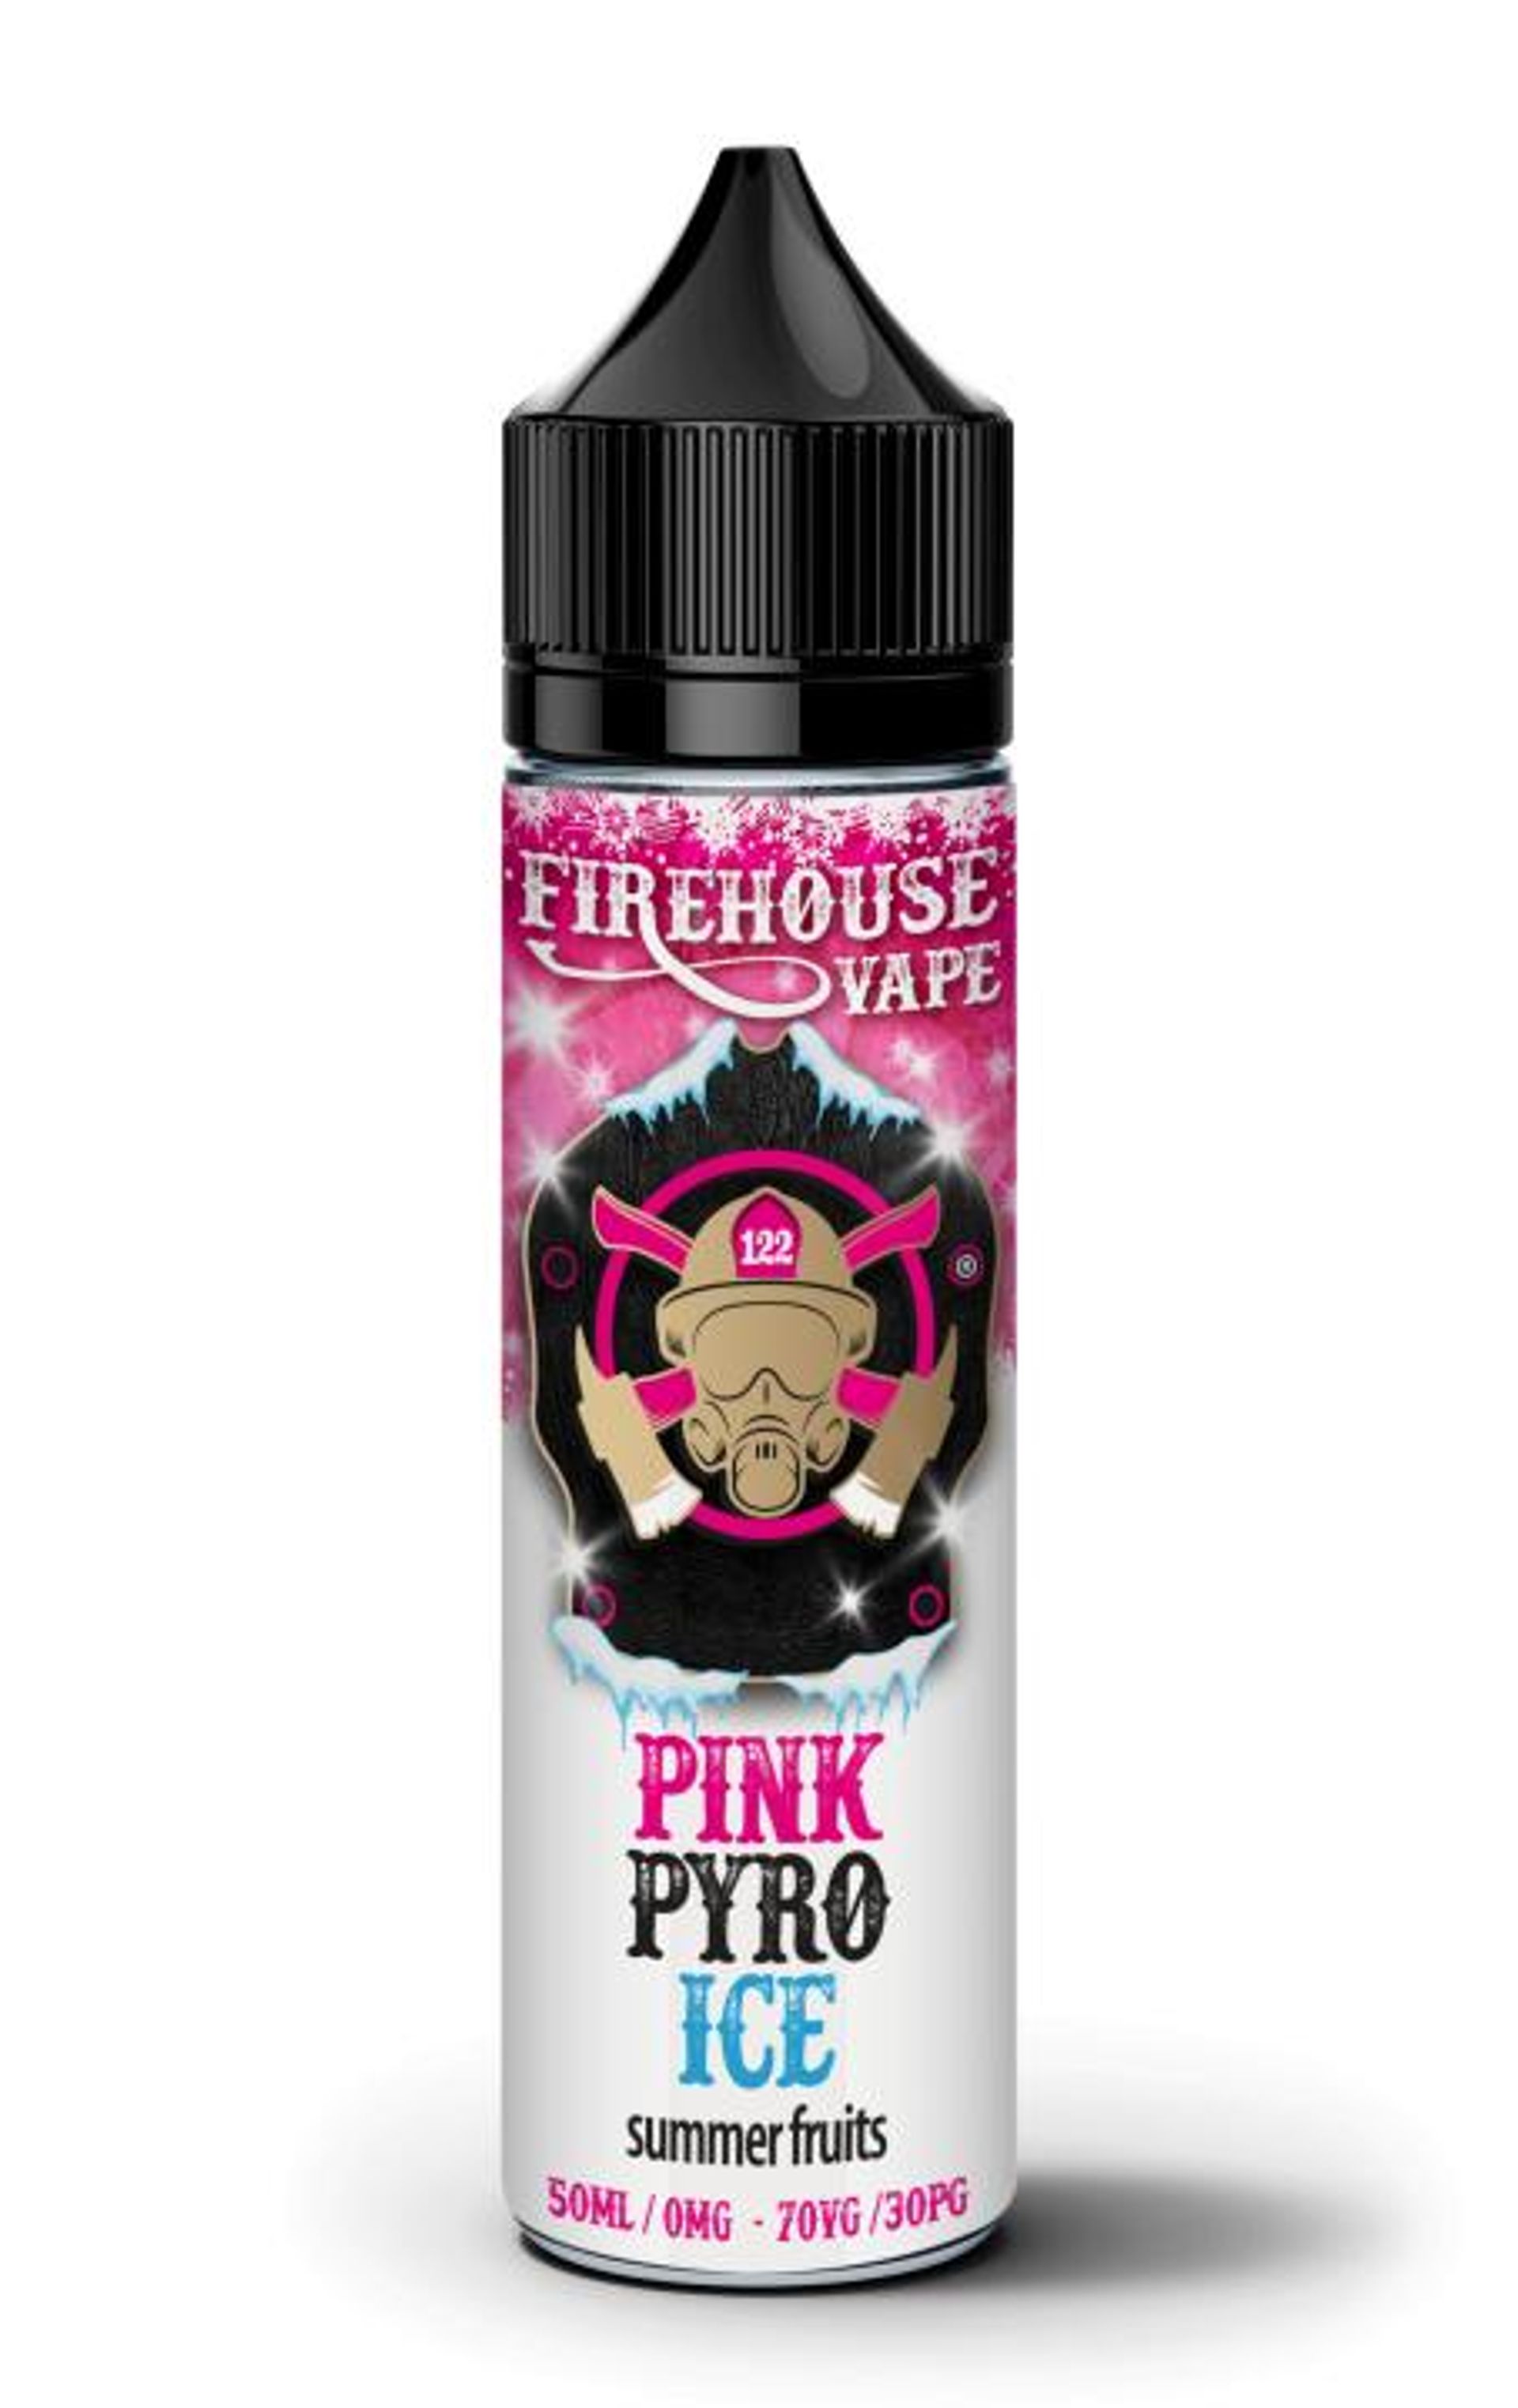 Image of Pink Pyro Ice by Firehouse Vape